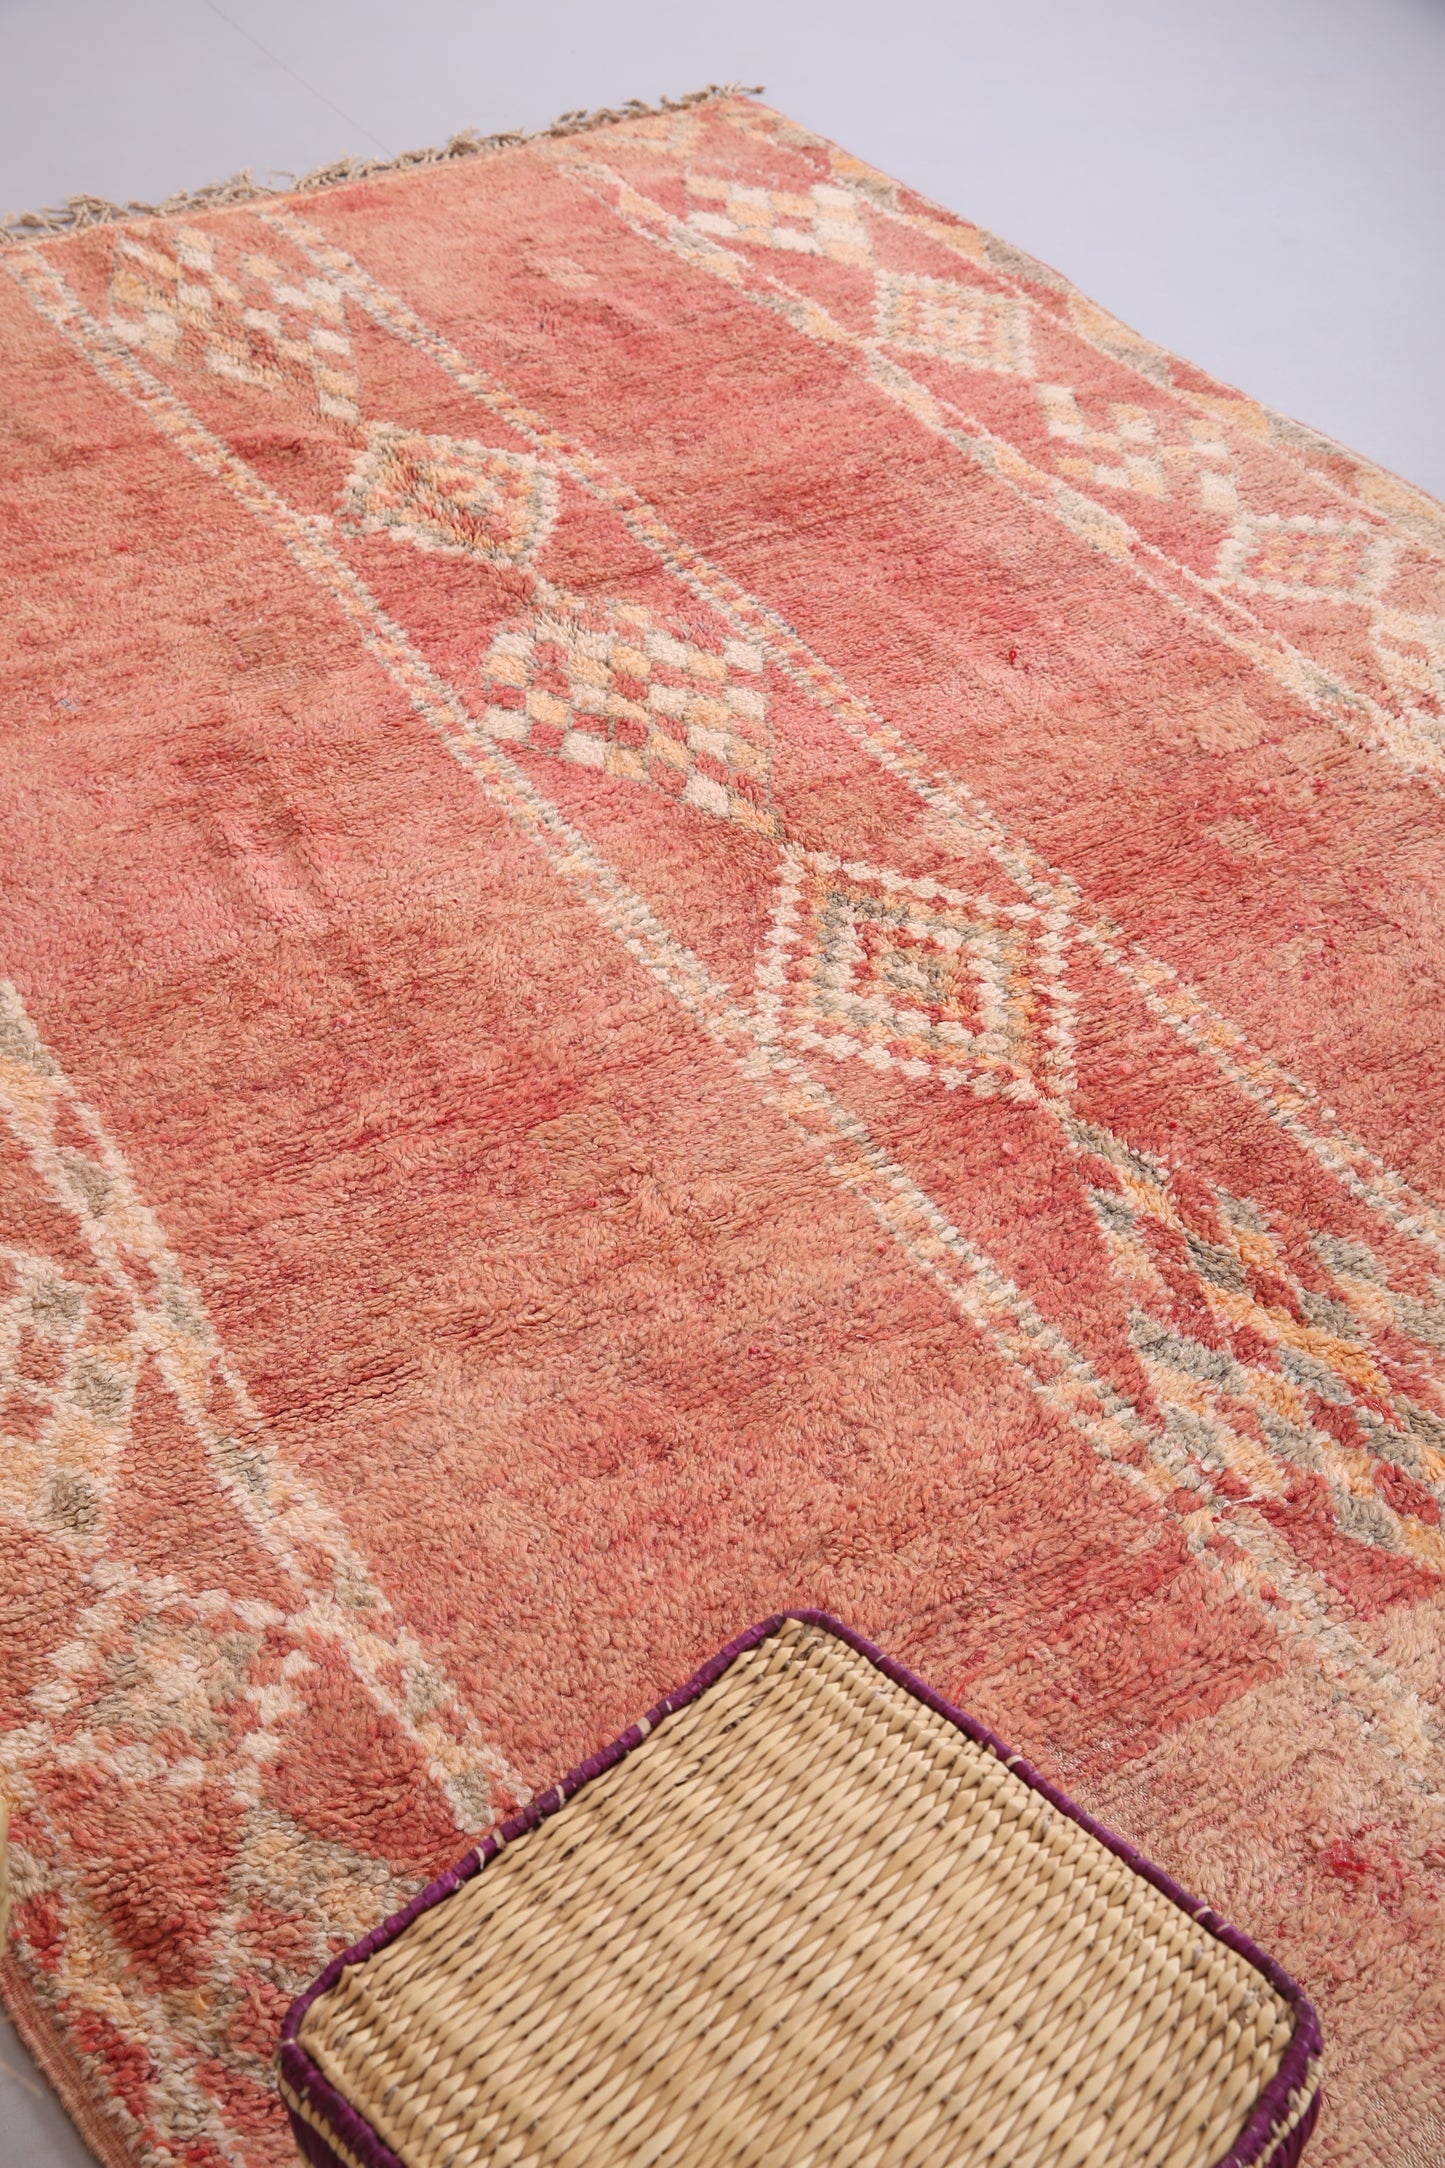 Fabelhafter authentischer marokkanischer Teppich 6,3 FT x 9,6 FT - Vintage marokkanischer Teppich - handgemachter Teppich - Berberteppich - alter Boho-Teppich - Pfirsichteppich